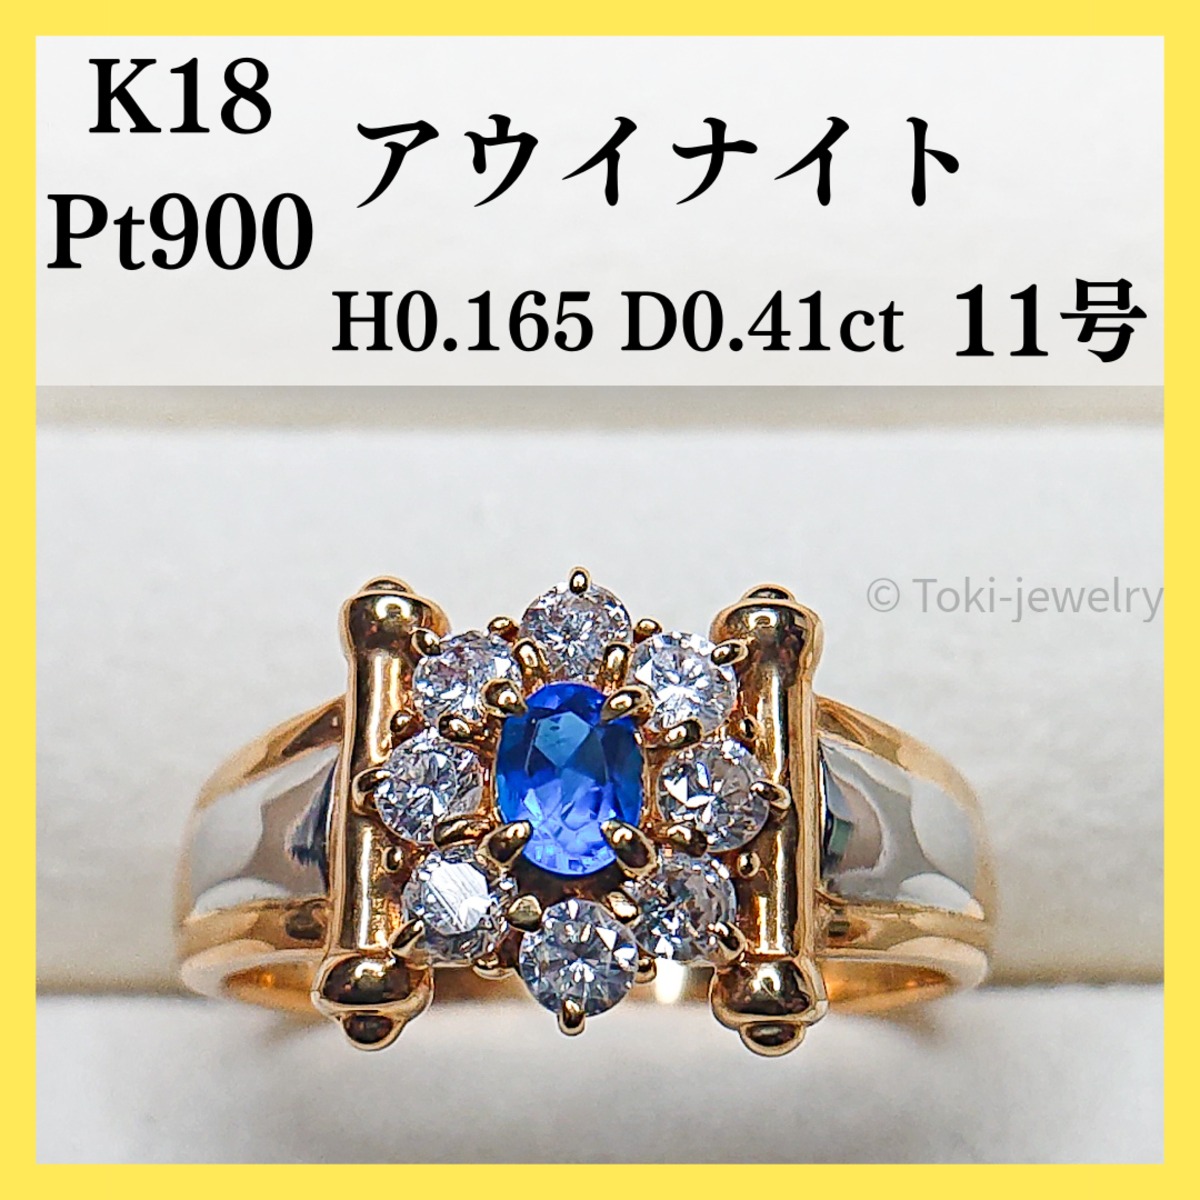 K18/Pt900（18金/プラチナ コンビ）アウイナイト/ダイヤモンド リング | toki-jewelry powered by BASE